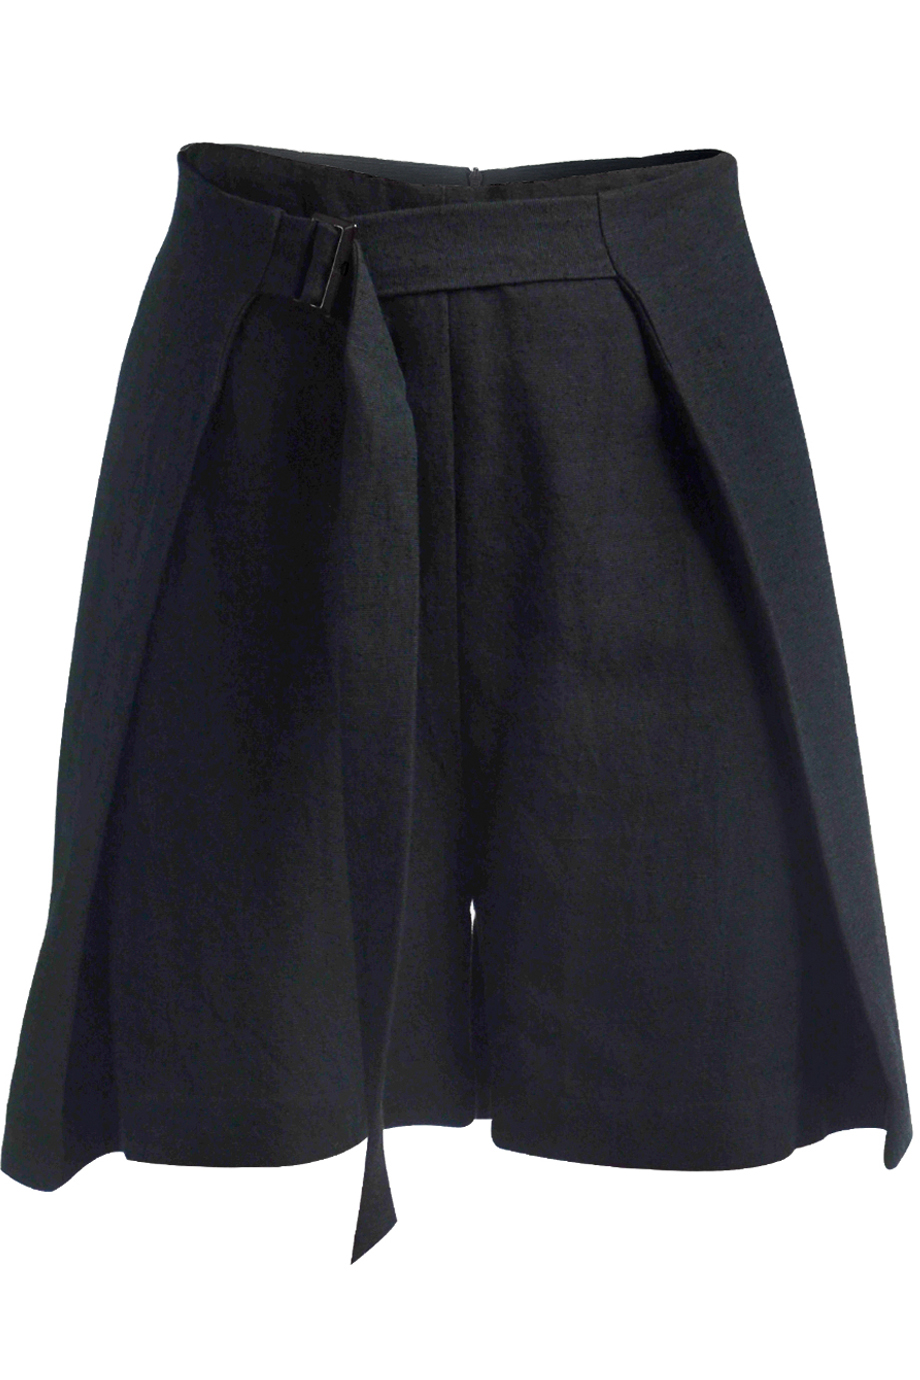 Quần lụa tơ tằm 100% Sonnet Silk Wrap Shorts/ Black